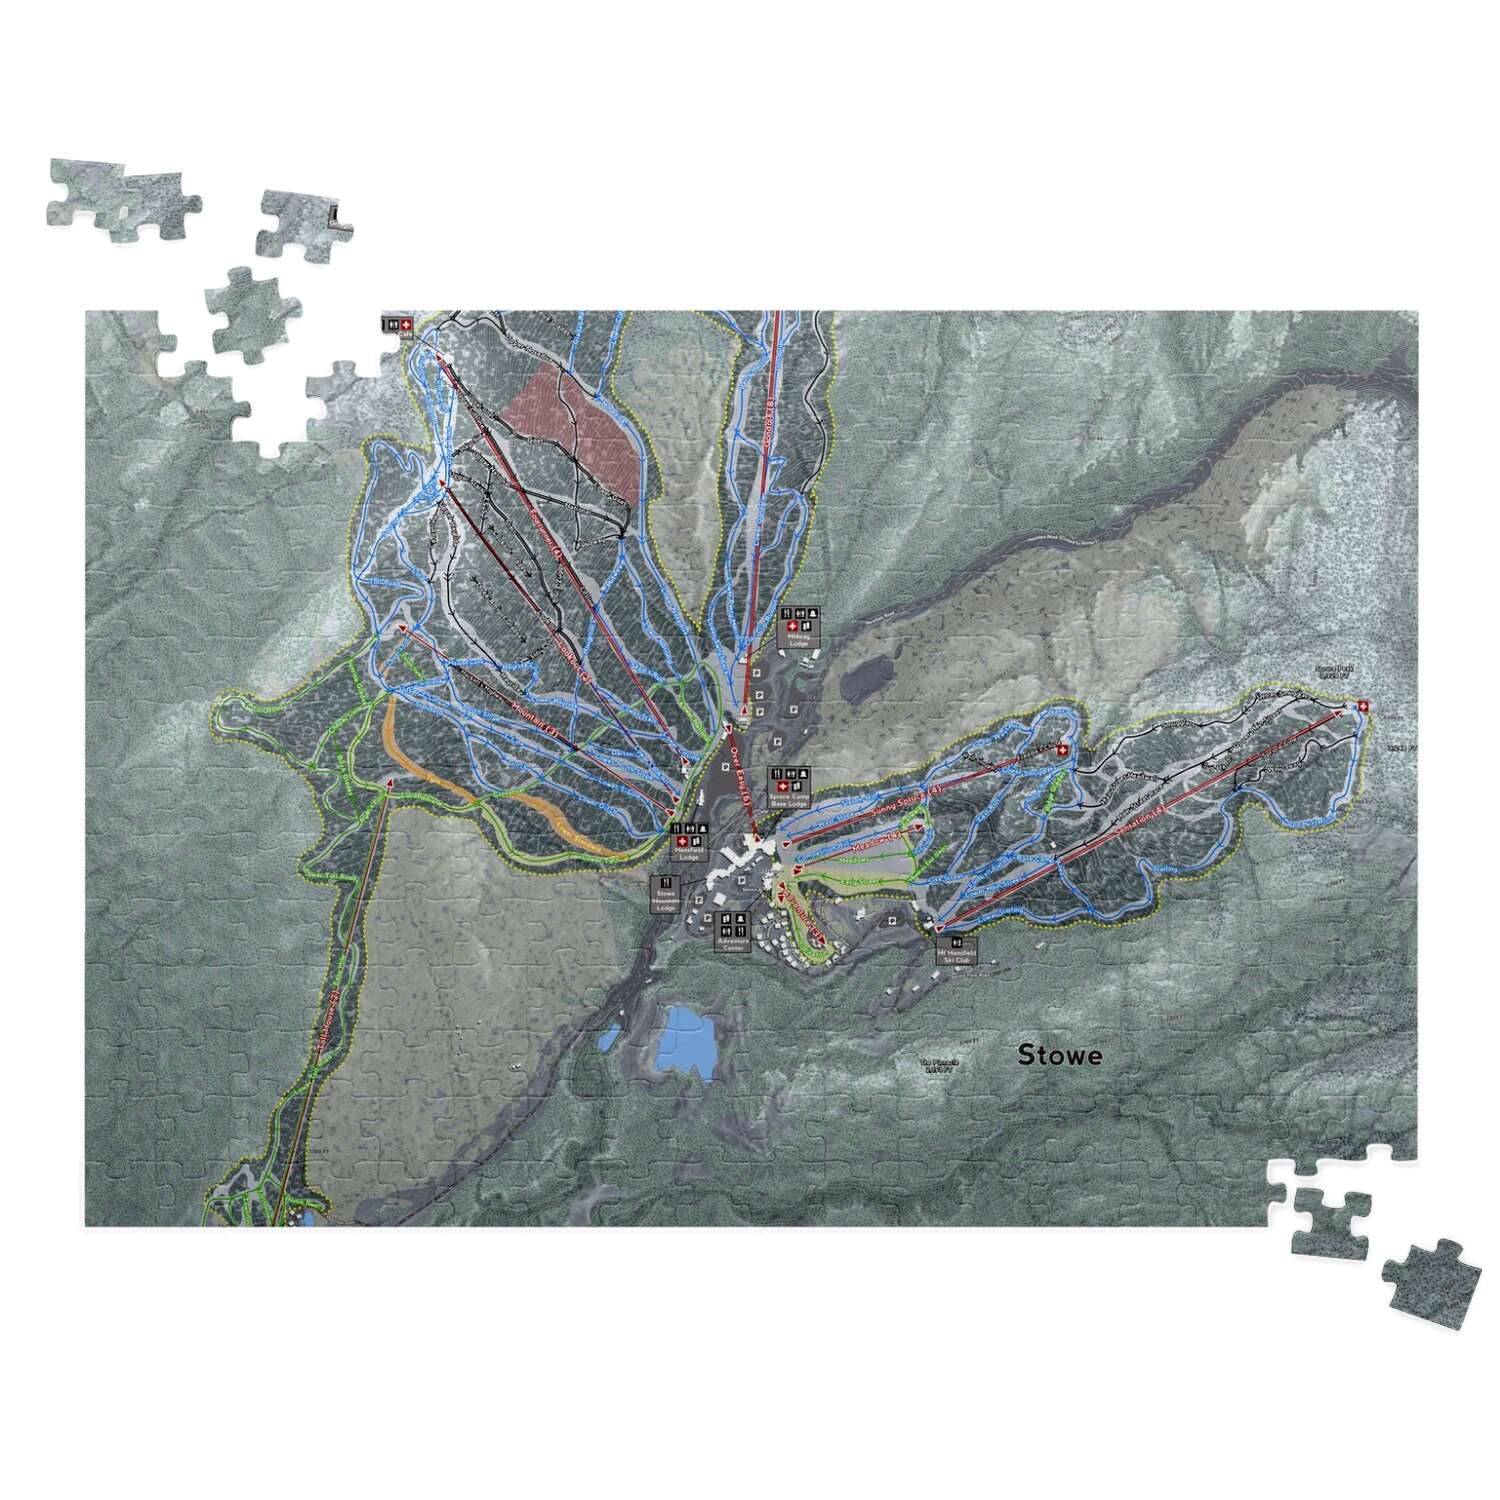 Stowe Vermont Ski Trail Map Puzzle - Powderaddicts